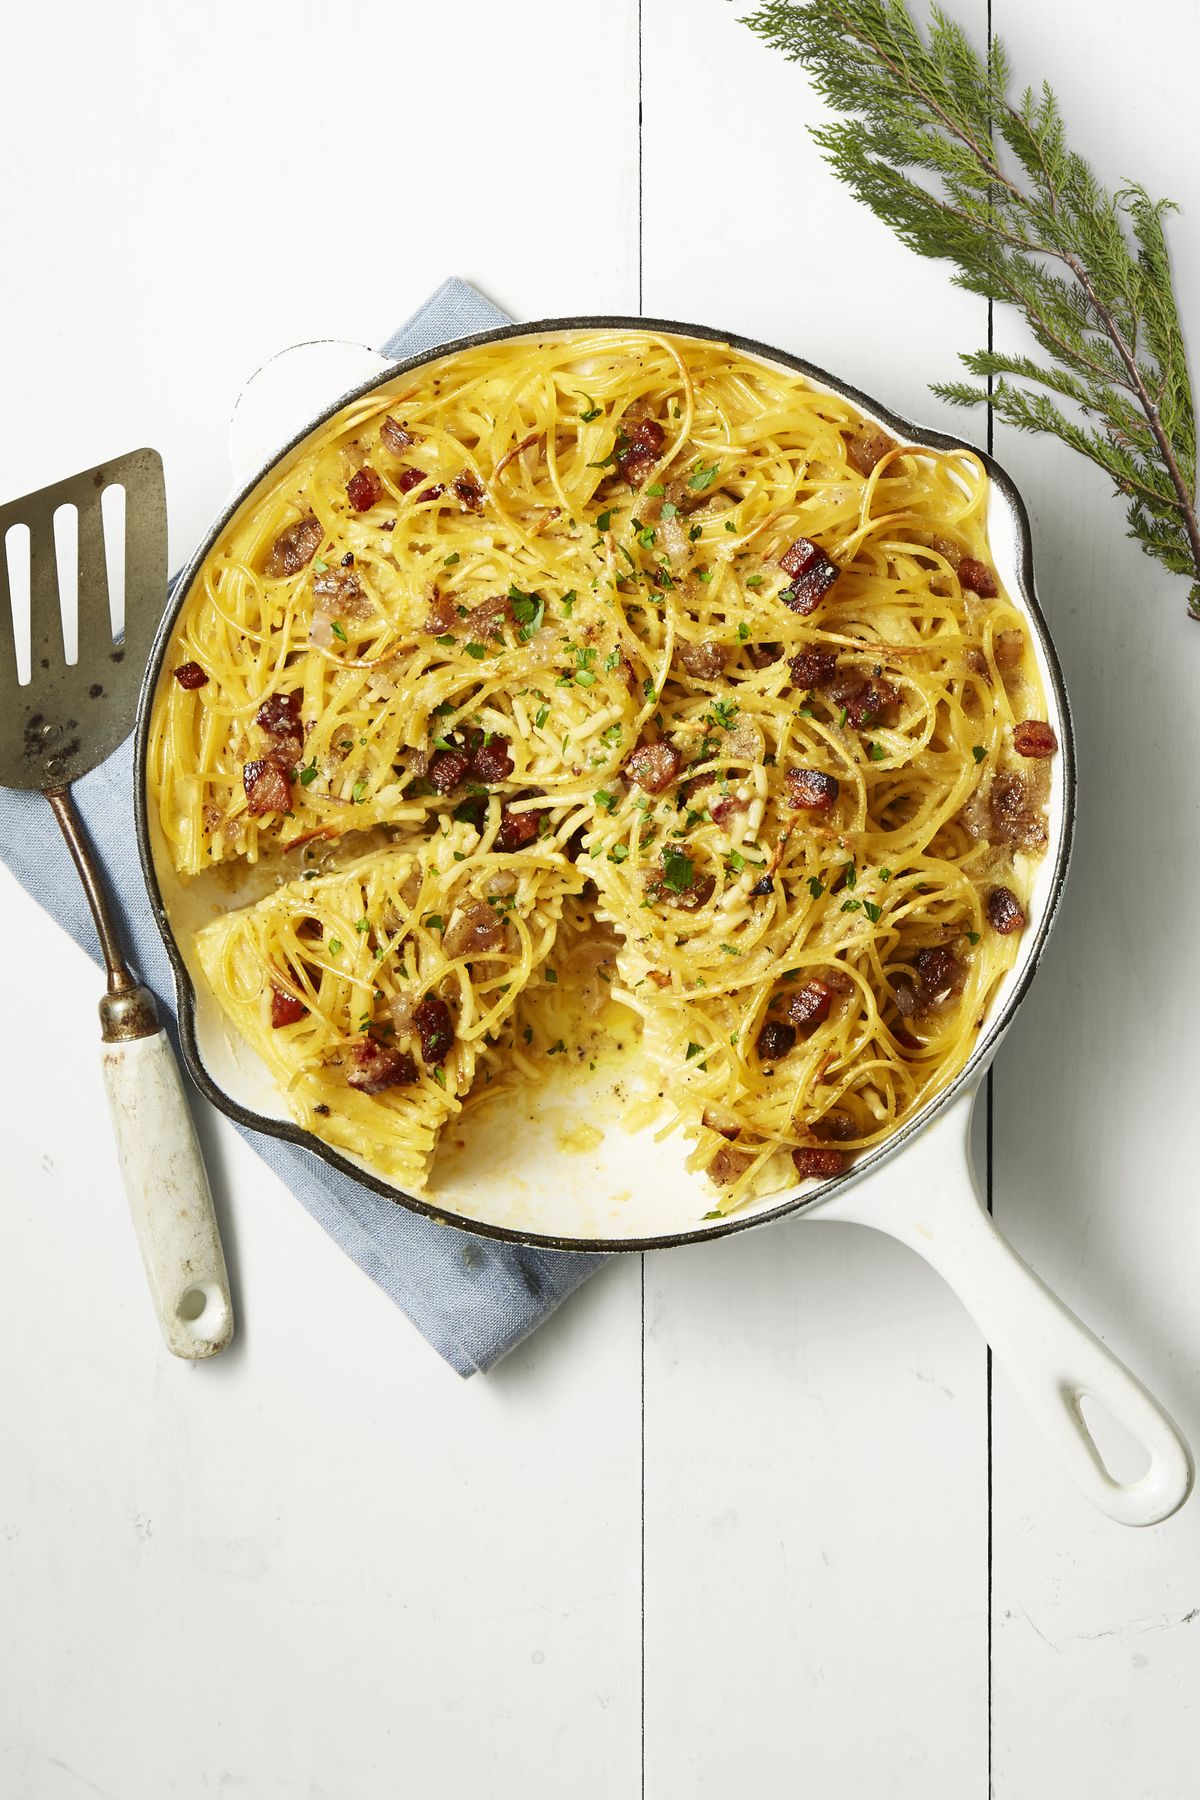 easy egg recipes - spaghetti carbonara skillet pie